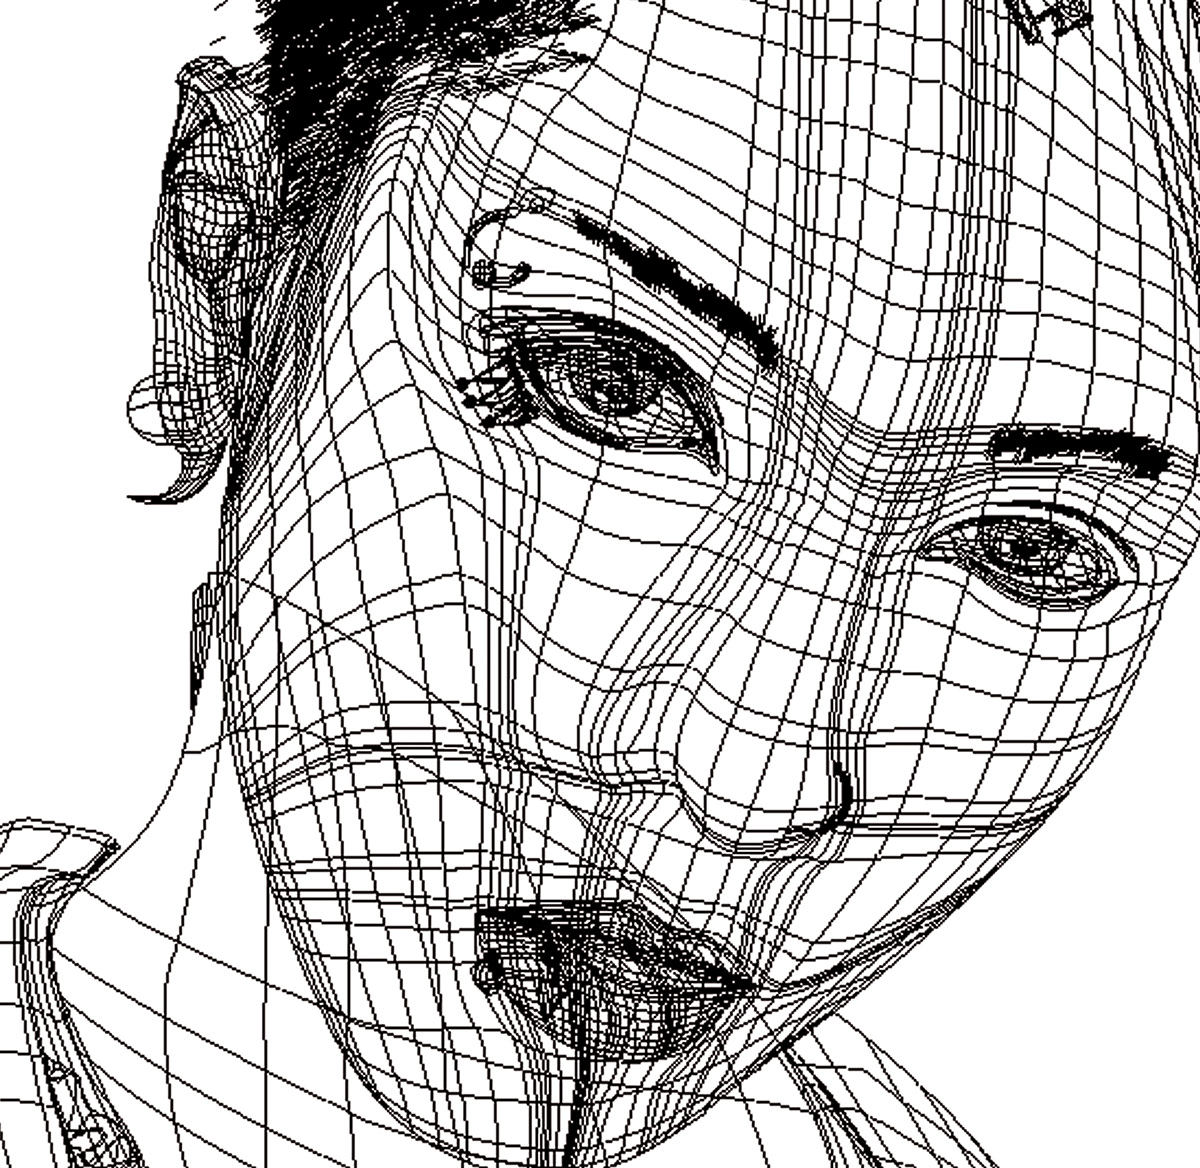 Miyavi mesh portrait Illustrator malla gradientmesh gradient visual visual-kei